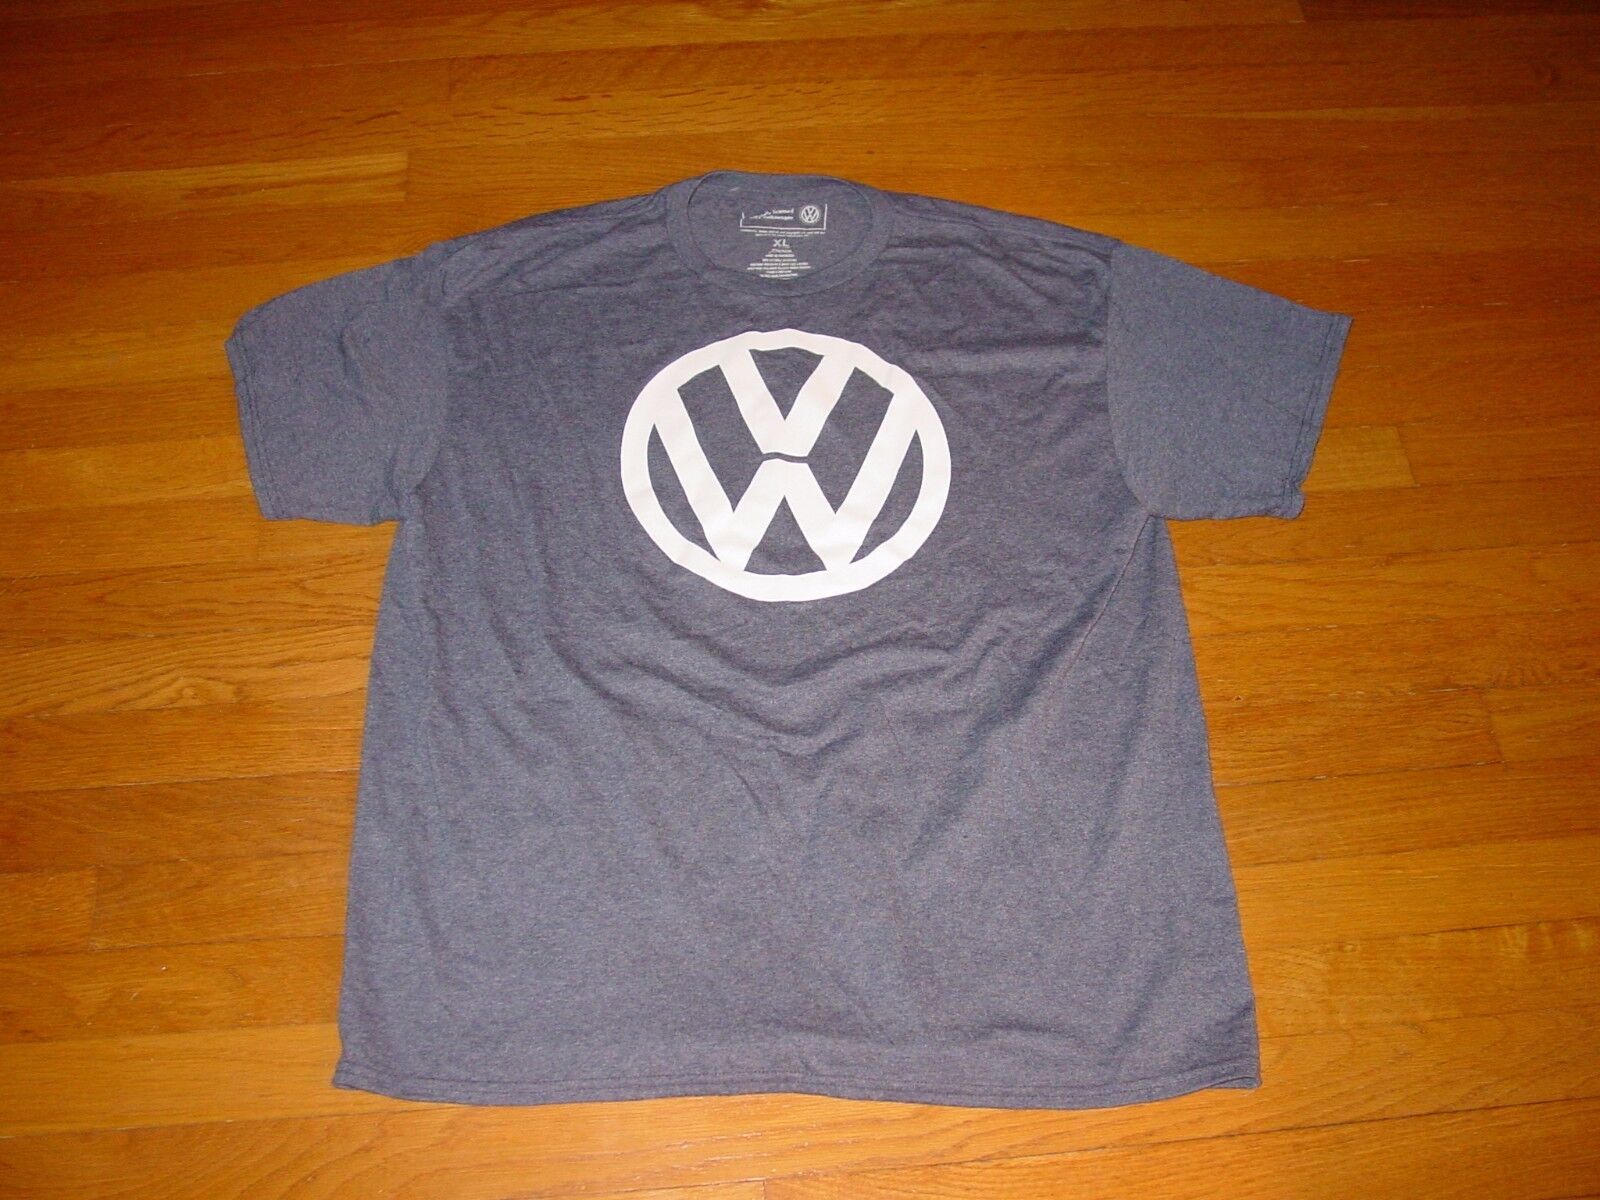 VW Official Licensed  VOLKSWAGEN  Logo   FAHRVERGNUGEN  T-Shirt NEW   XLarge  XL